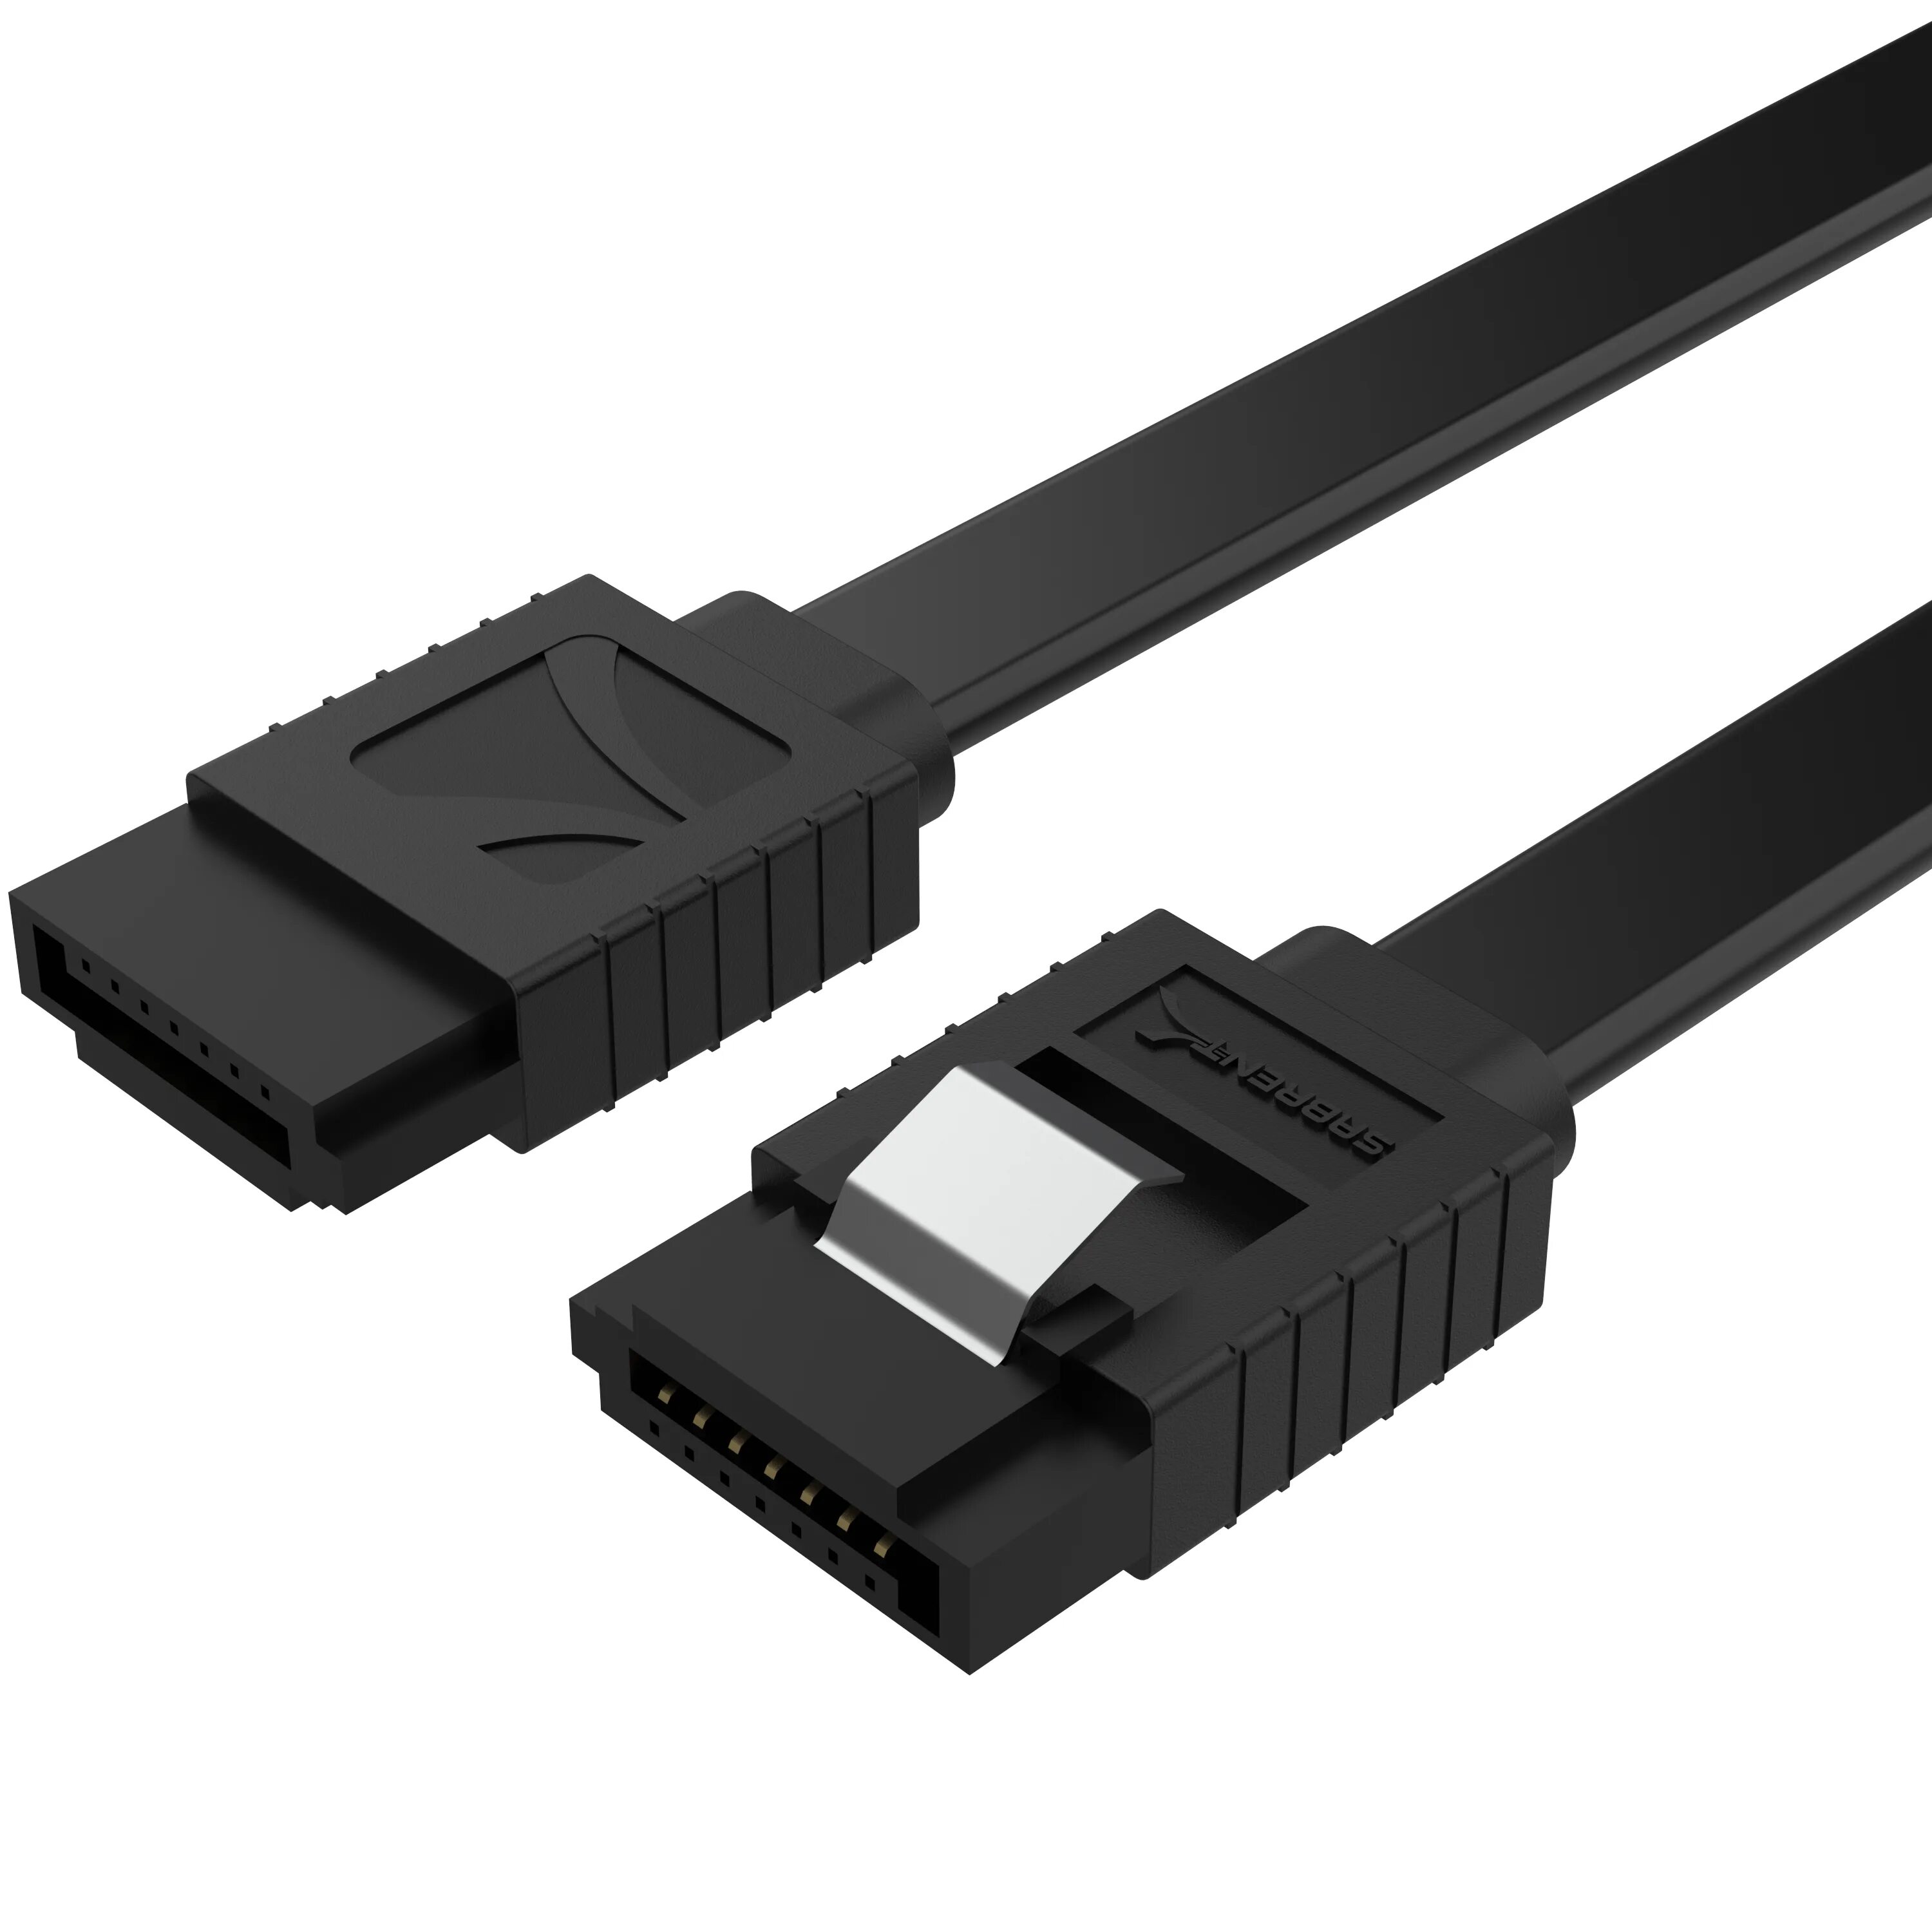 SSD SATA 3. SATA 3.0. SATA 3 кабель для SSD. SATA III vs SATA II. Кабель sata 3 купить